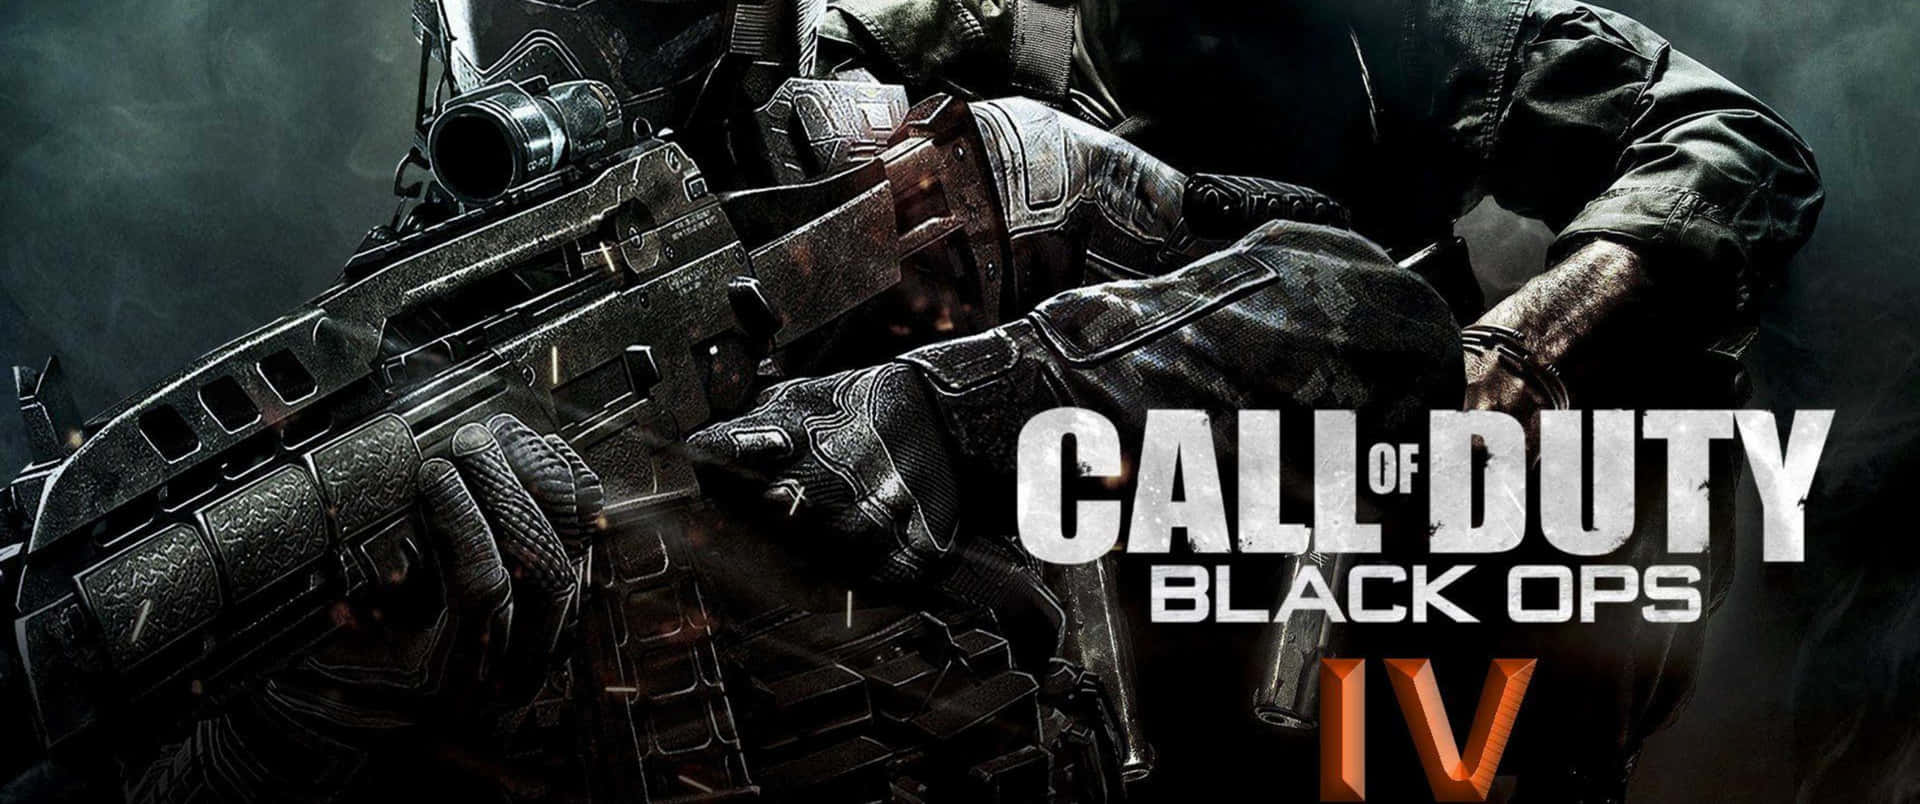 Evoke the Call of Duty on the Battlefield in Black Ops 4